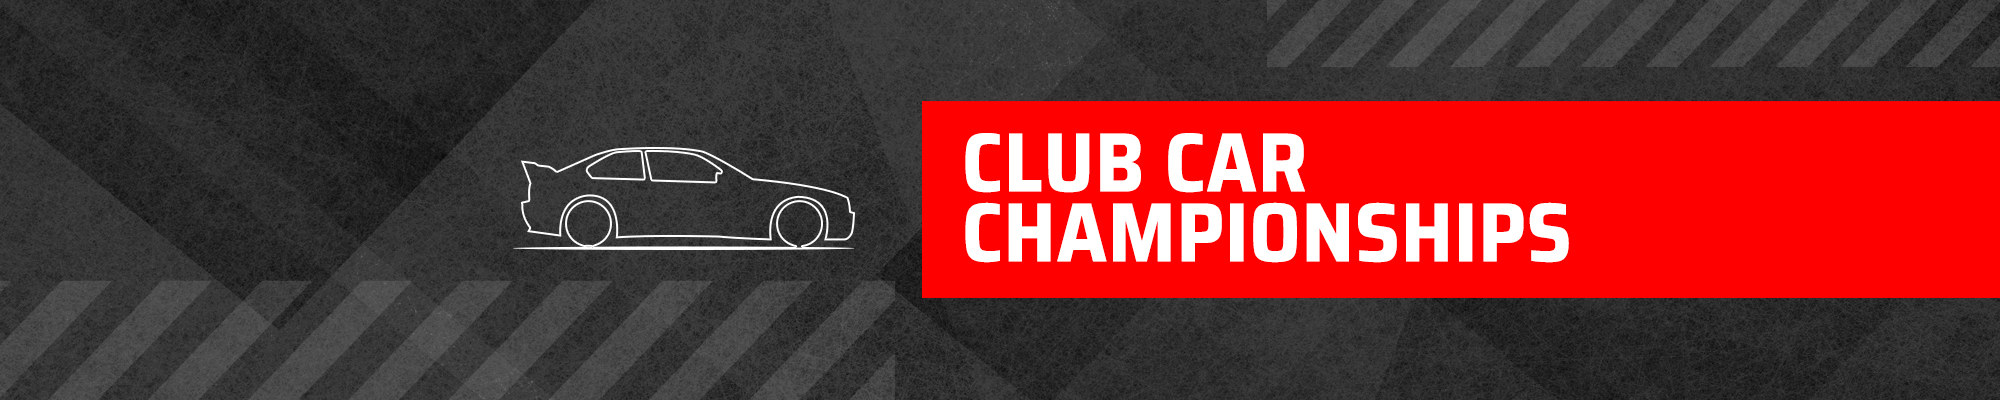 750 MC Club Car Championships